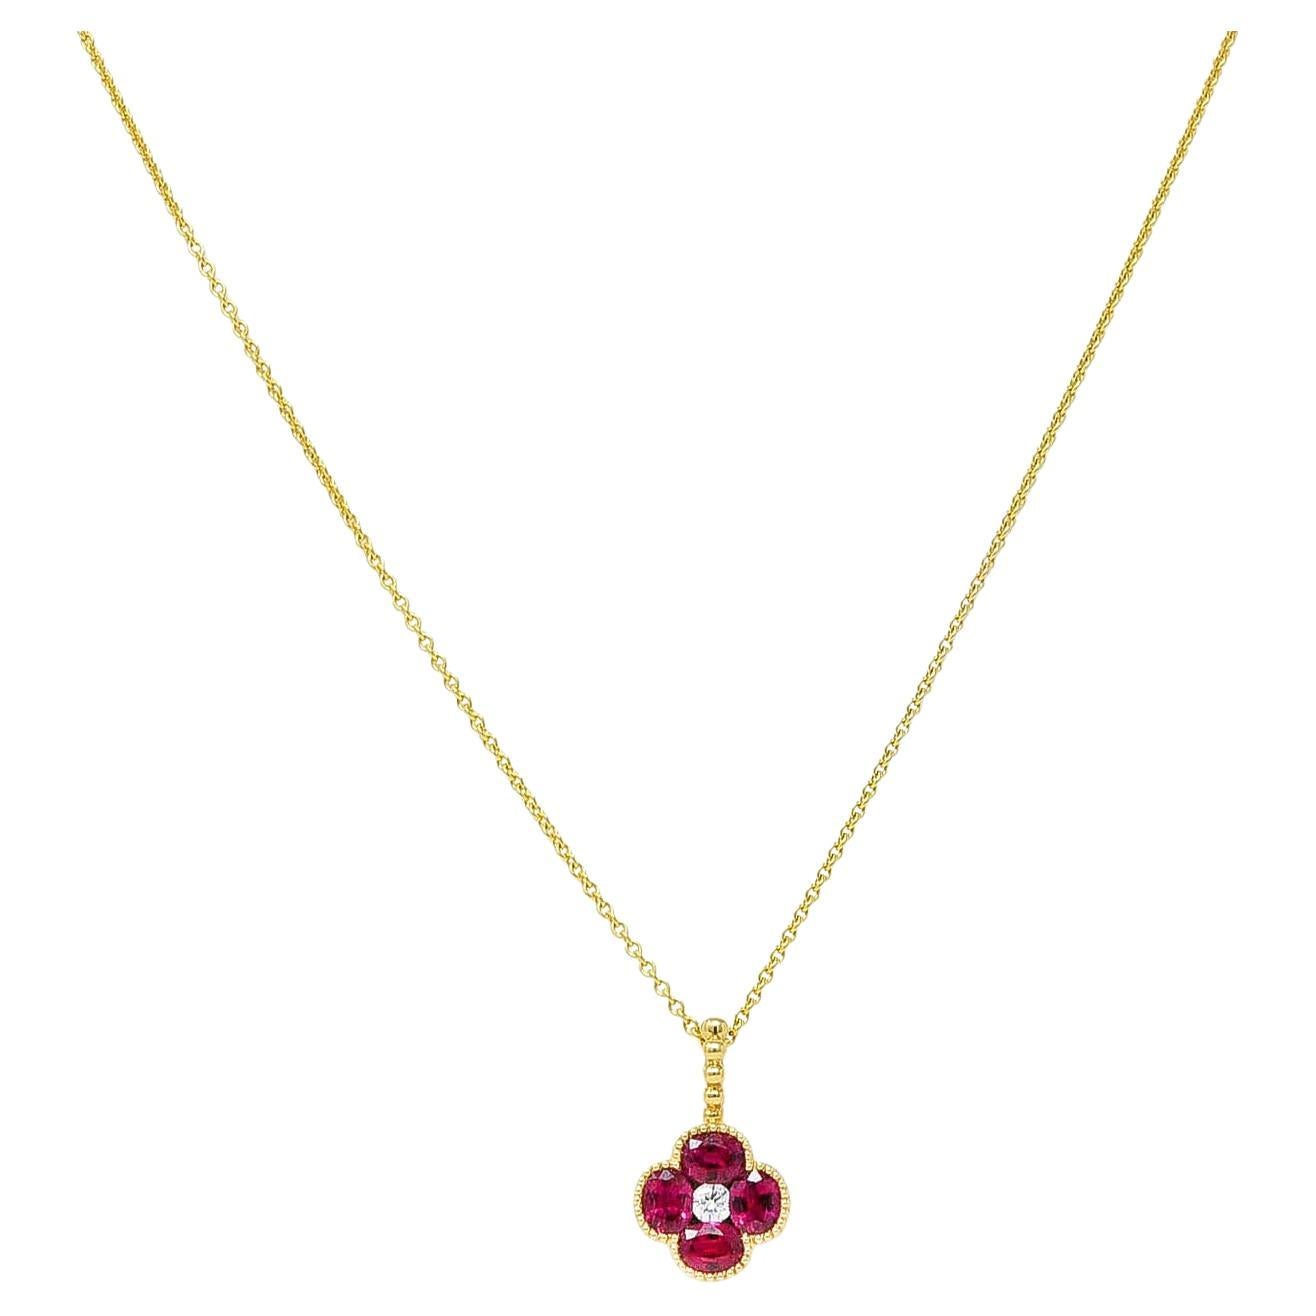 Spark 1.51 Carats Ruby Diamond 18 Karat Yellow Gold Flower Pendant Necklace